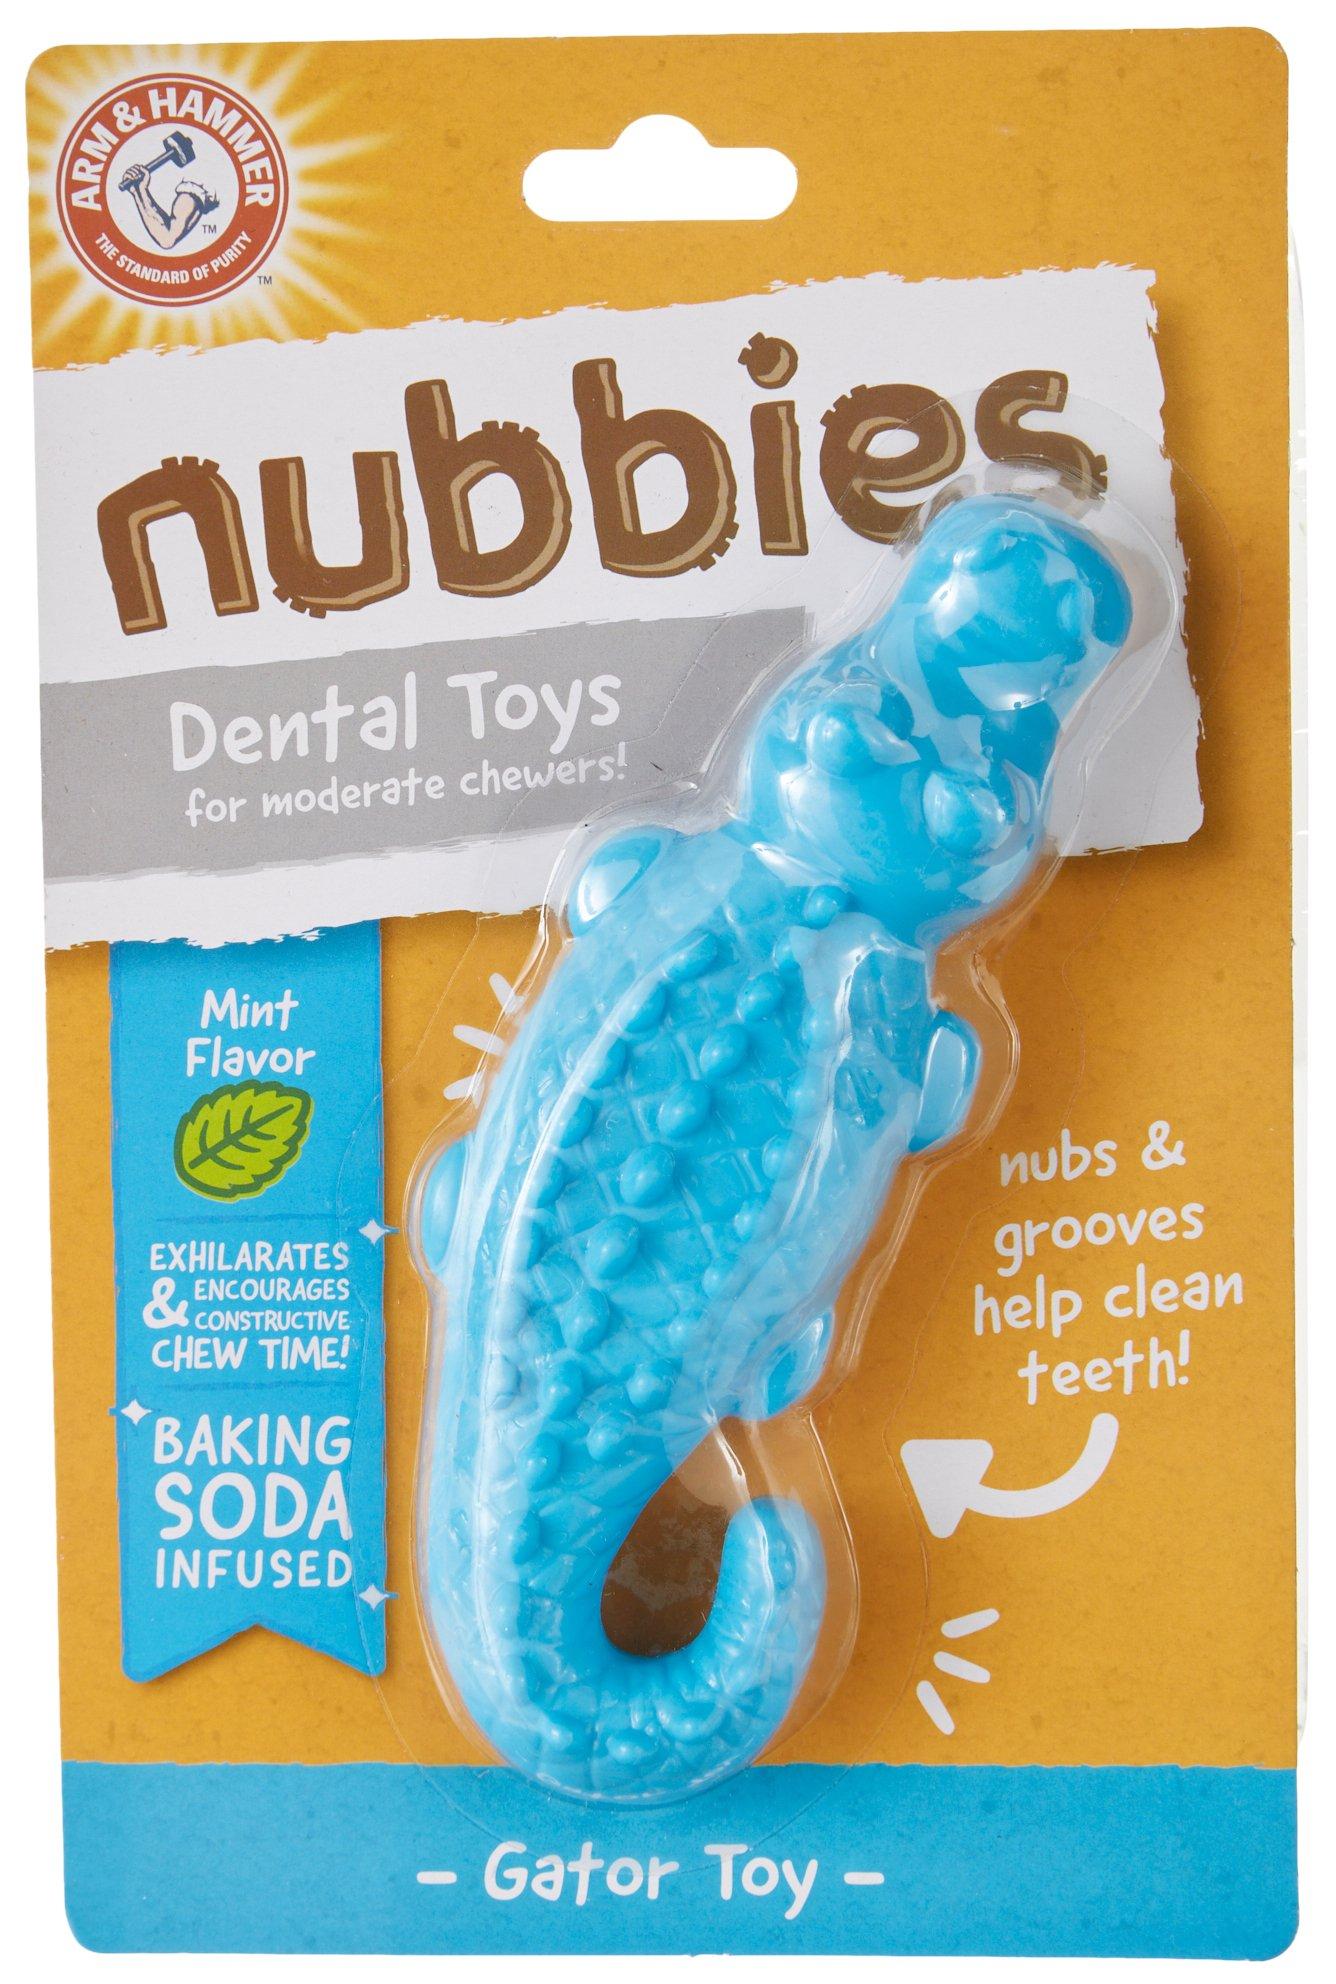 Nubbies Alligator Dental Dog Toy